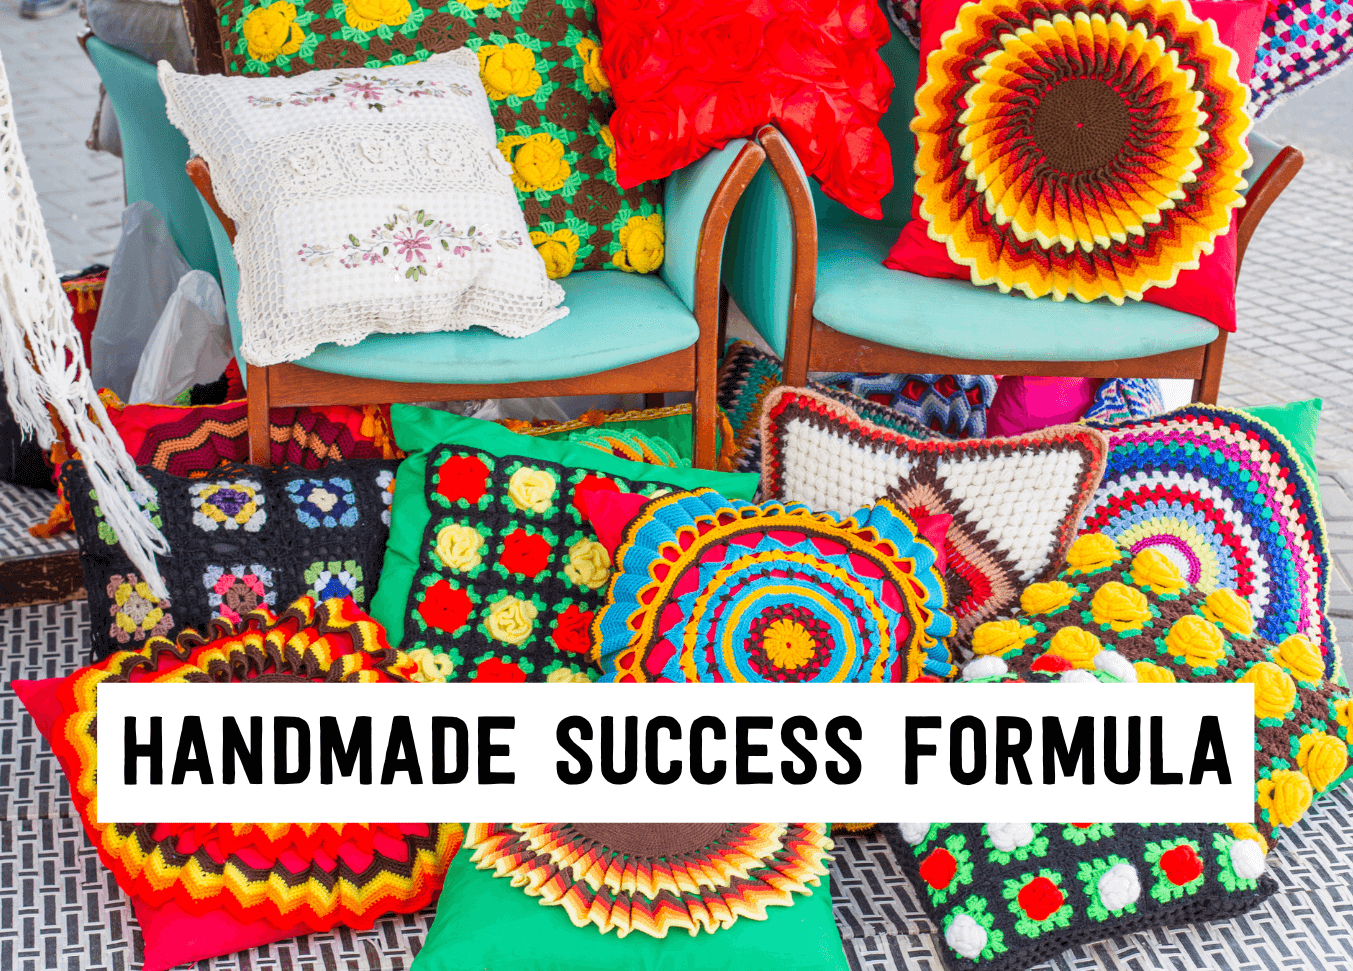 Handmade success formula | Tizzit.co - start and grow a successful handmade business